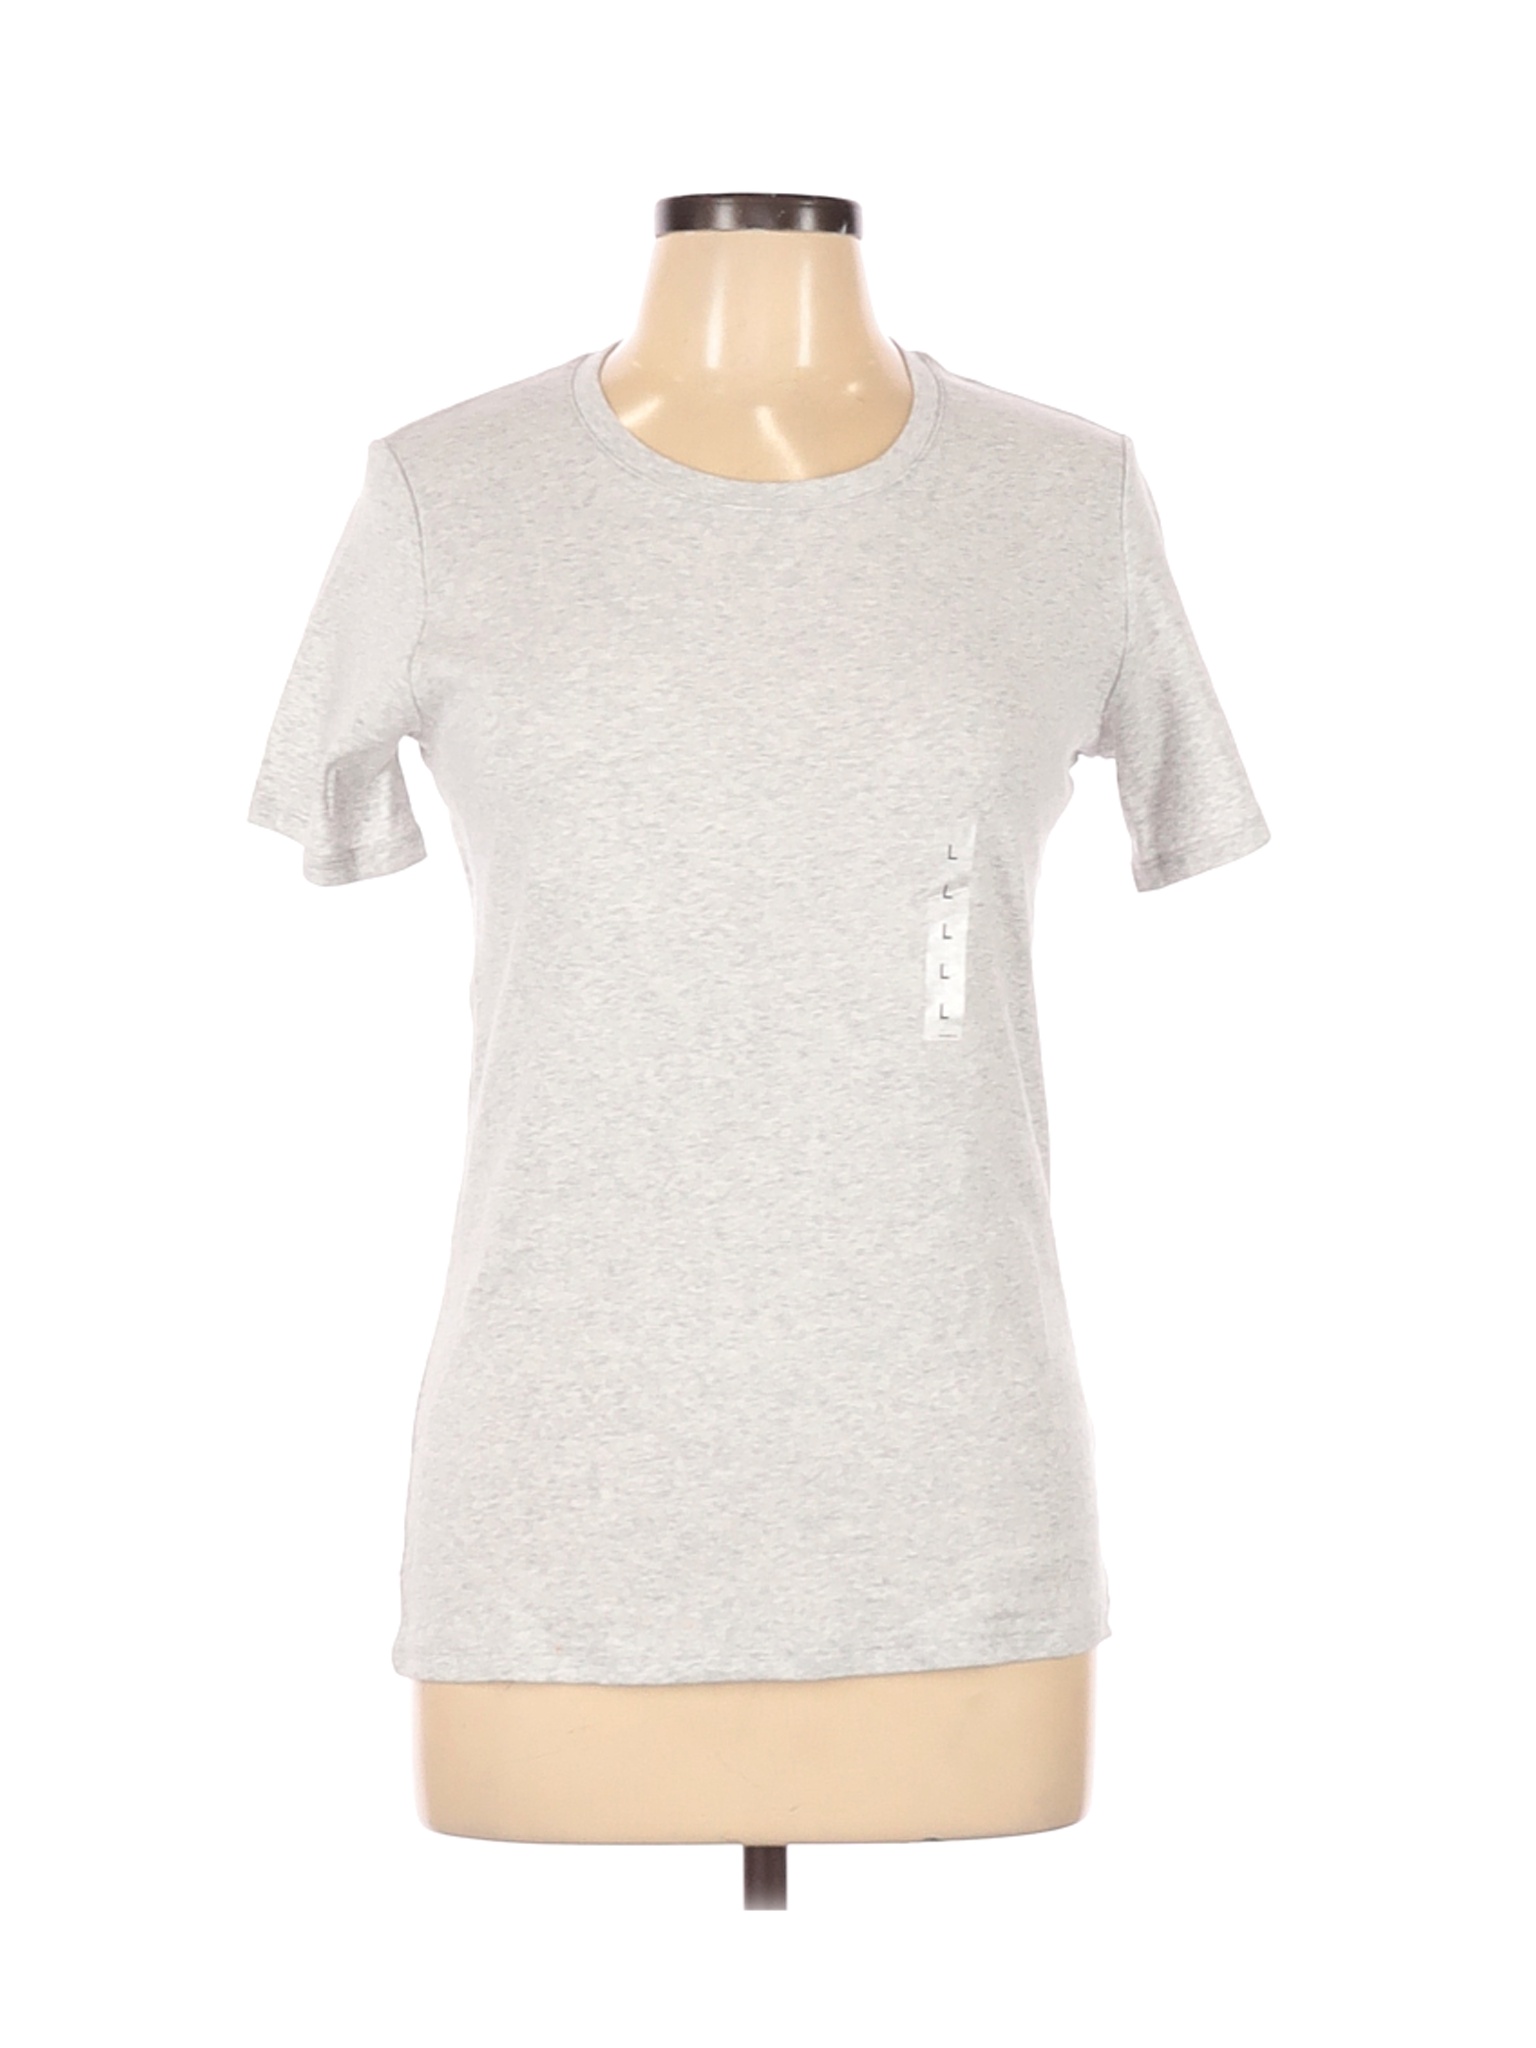 NWT Uniqlo Women White Short Sleeve T-Shirt L | eBay